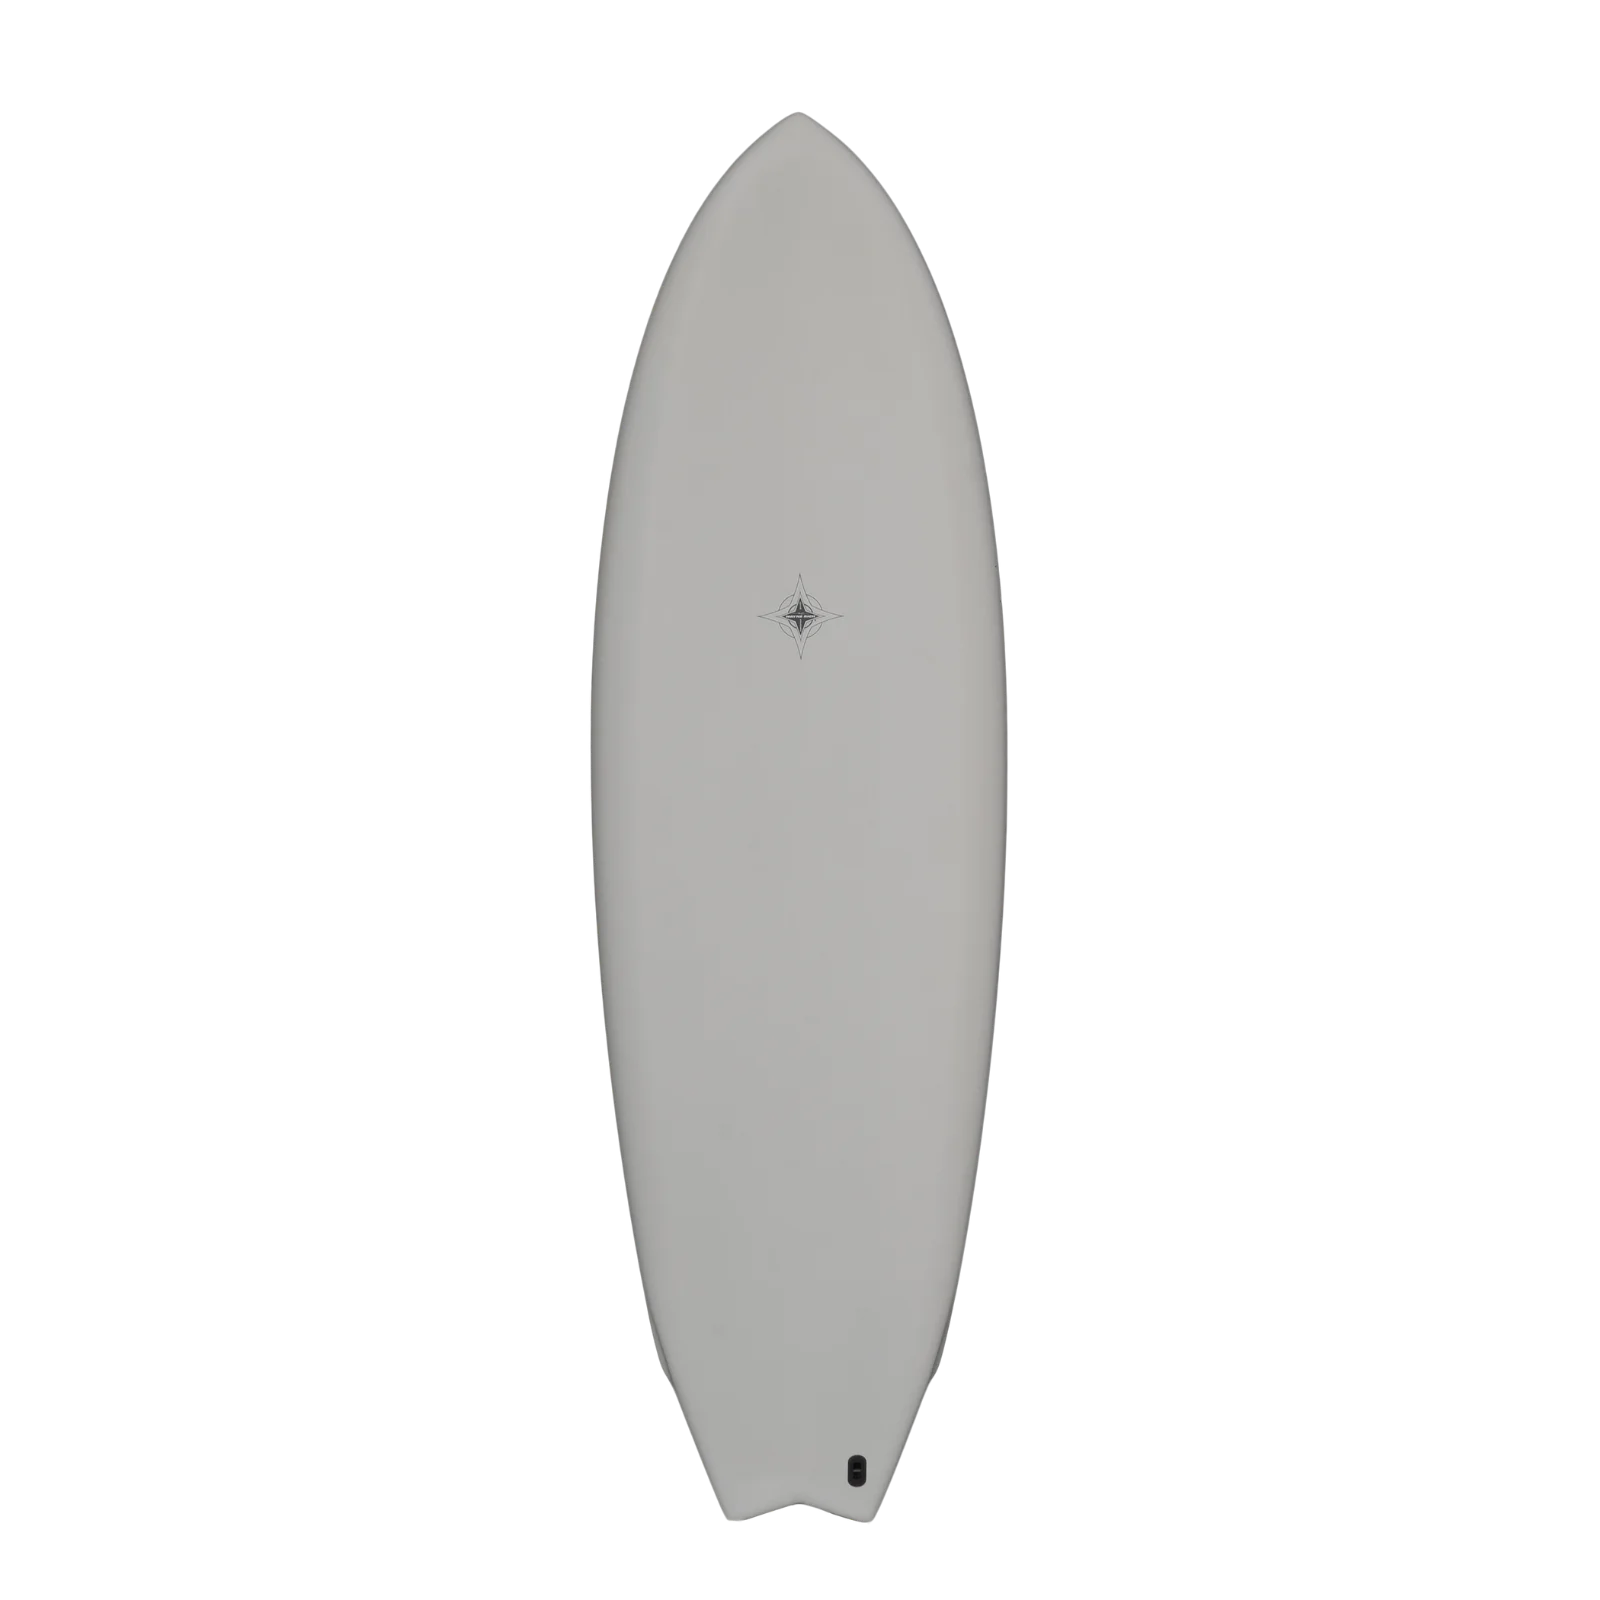 Wayne Rich Singularity - Swallow Tail - Carbon 5'4” x 19.5” x 2.25” - 26.8L   Aroona Surf, Sydney